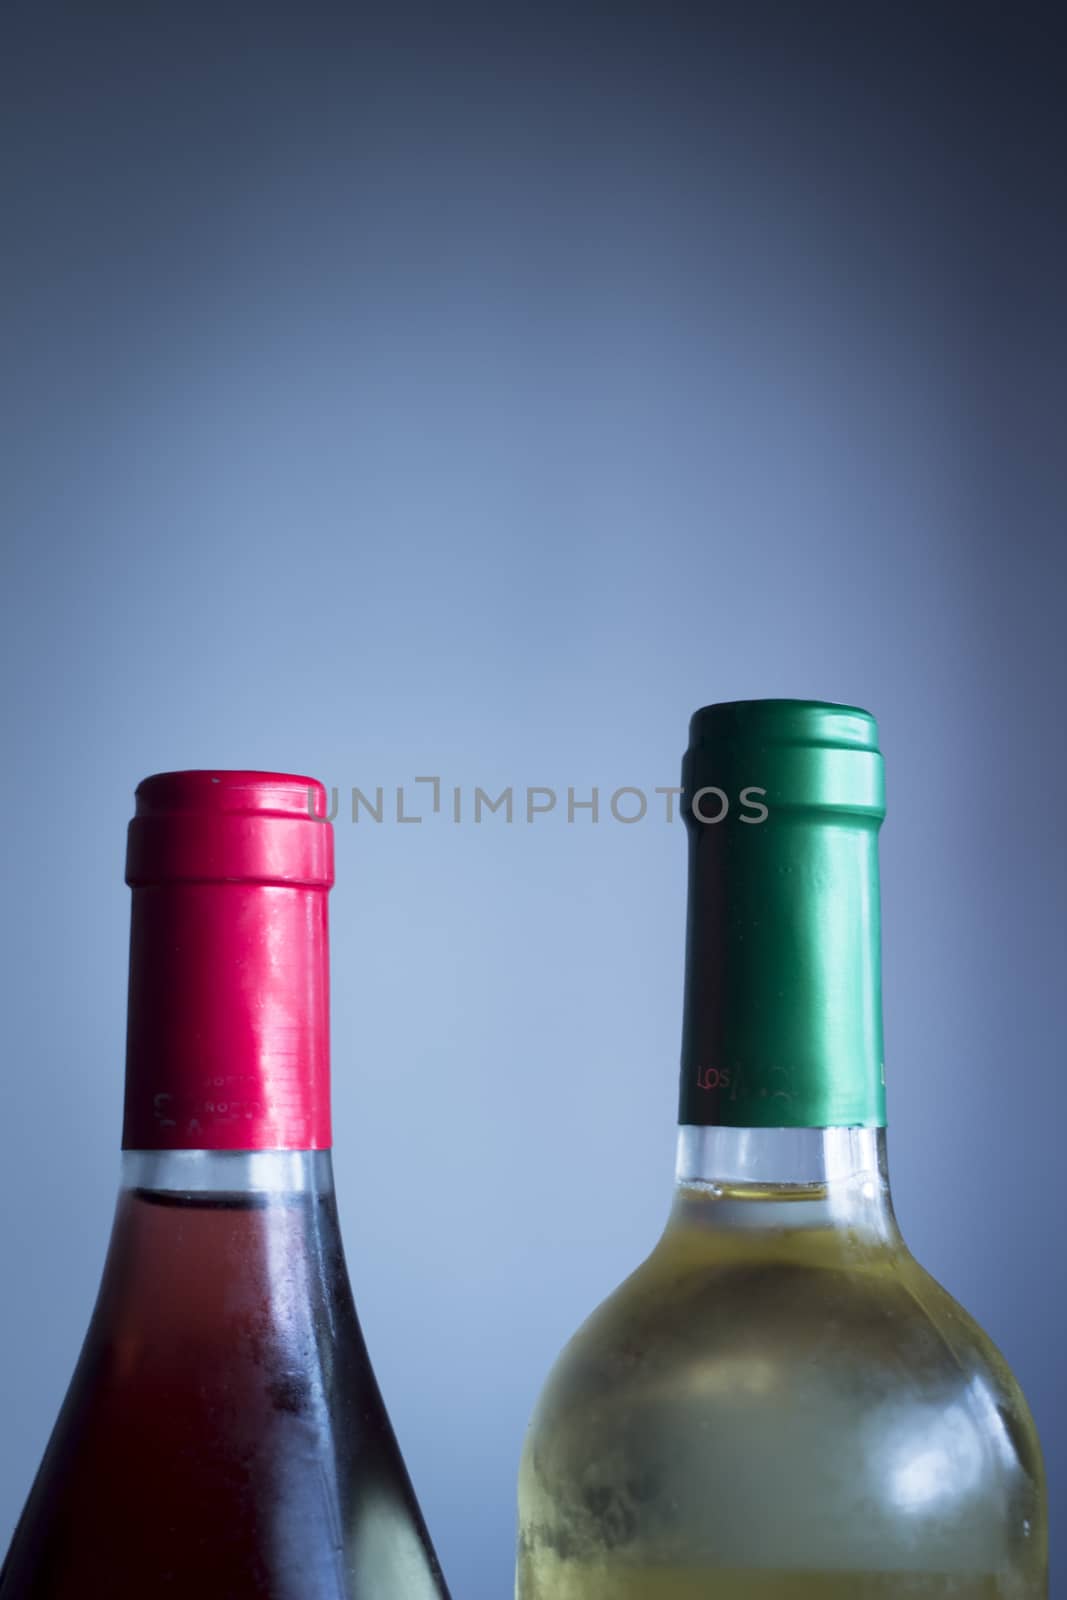 Rioja Spanish rose wine bottle and white wine bottle studio isolated close-up on plain blue background color photo.